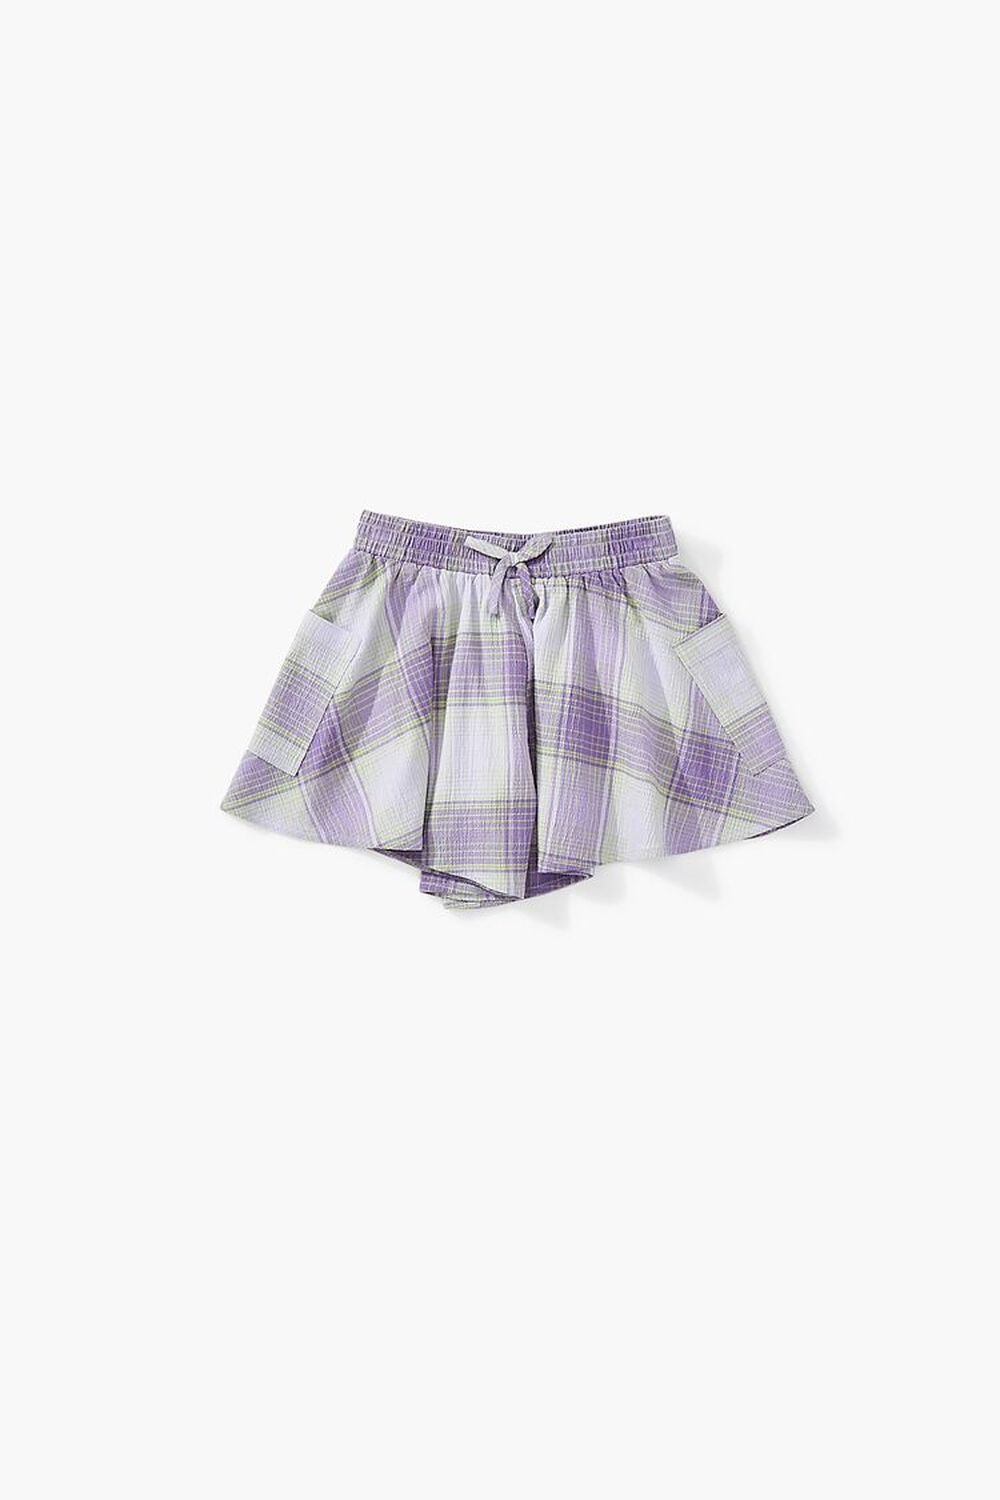 PURPLE/MULTI Girls Plaid Flounce Shorts (Kids), image 1